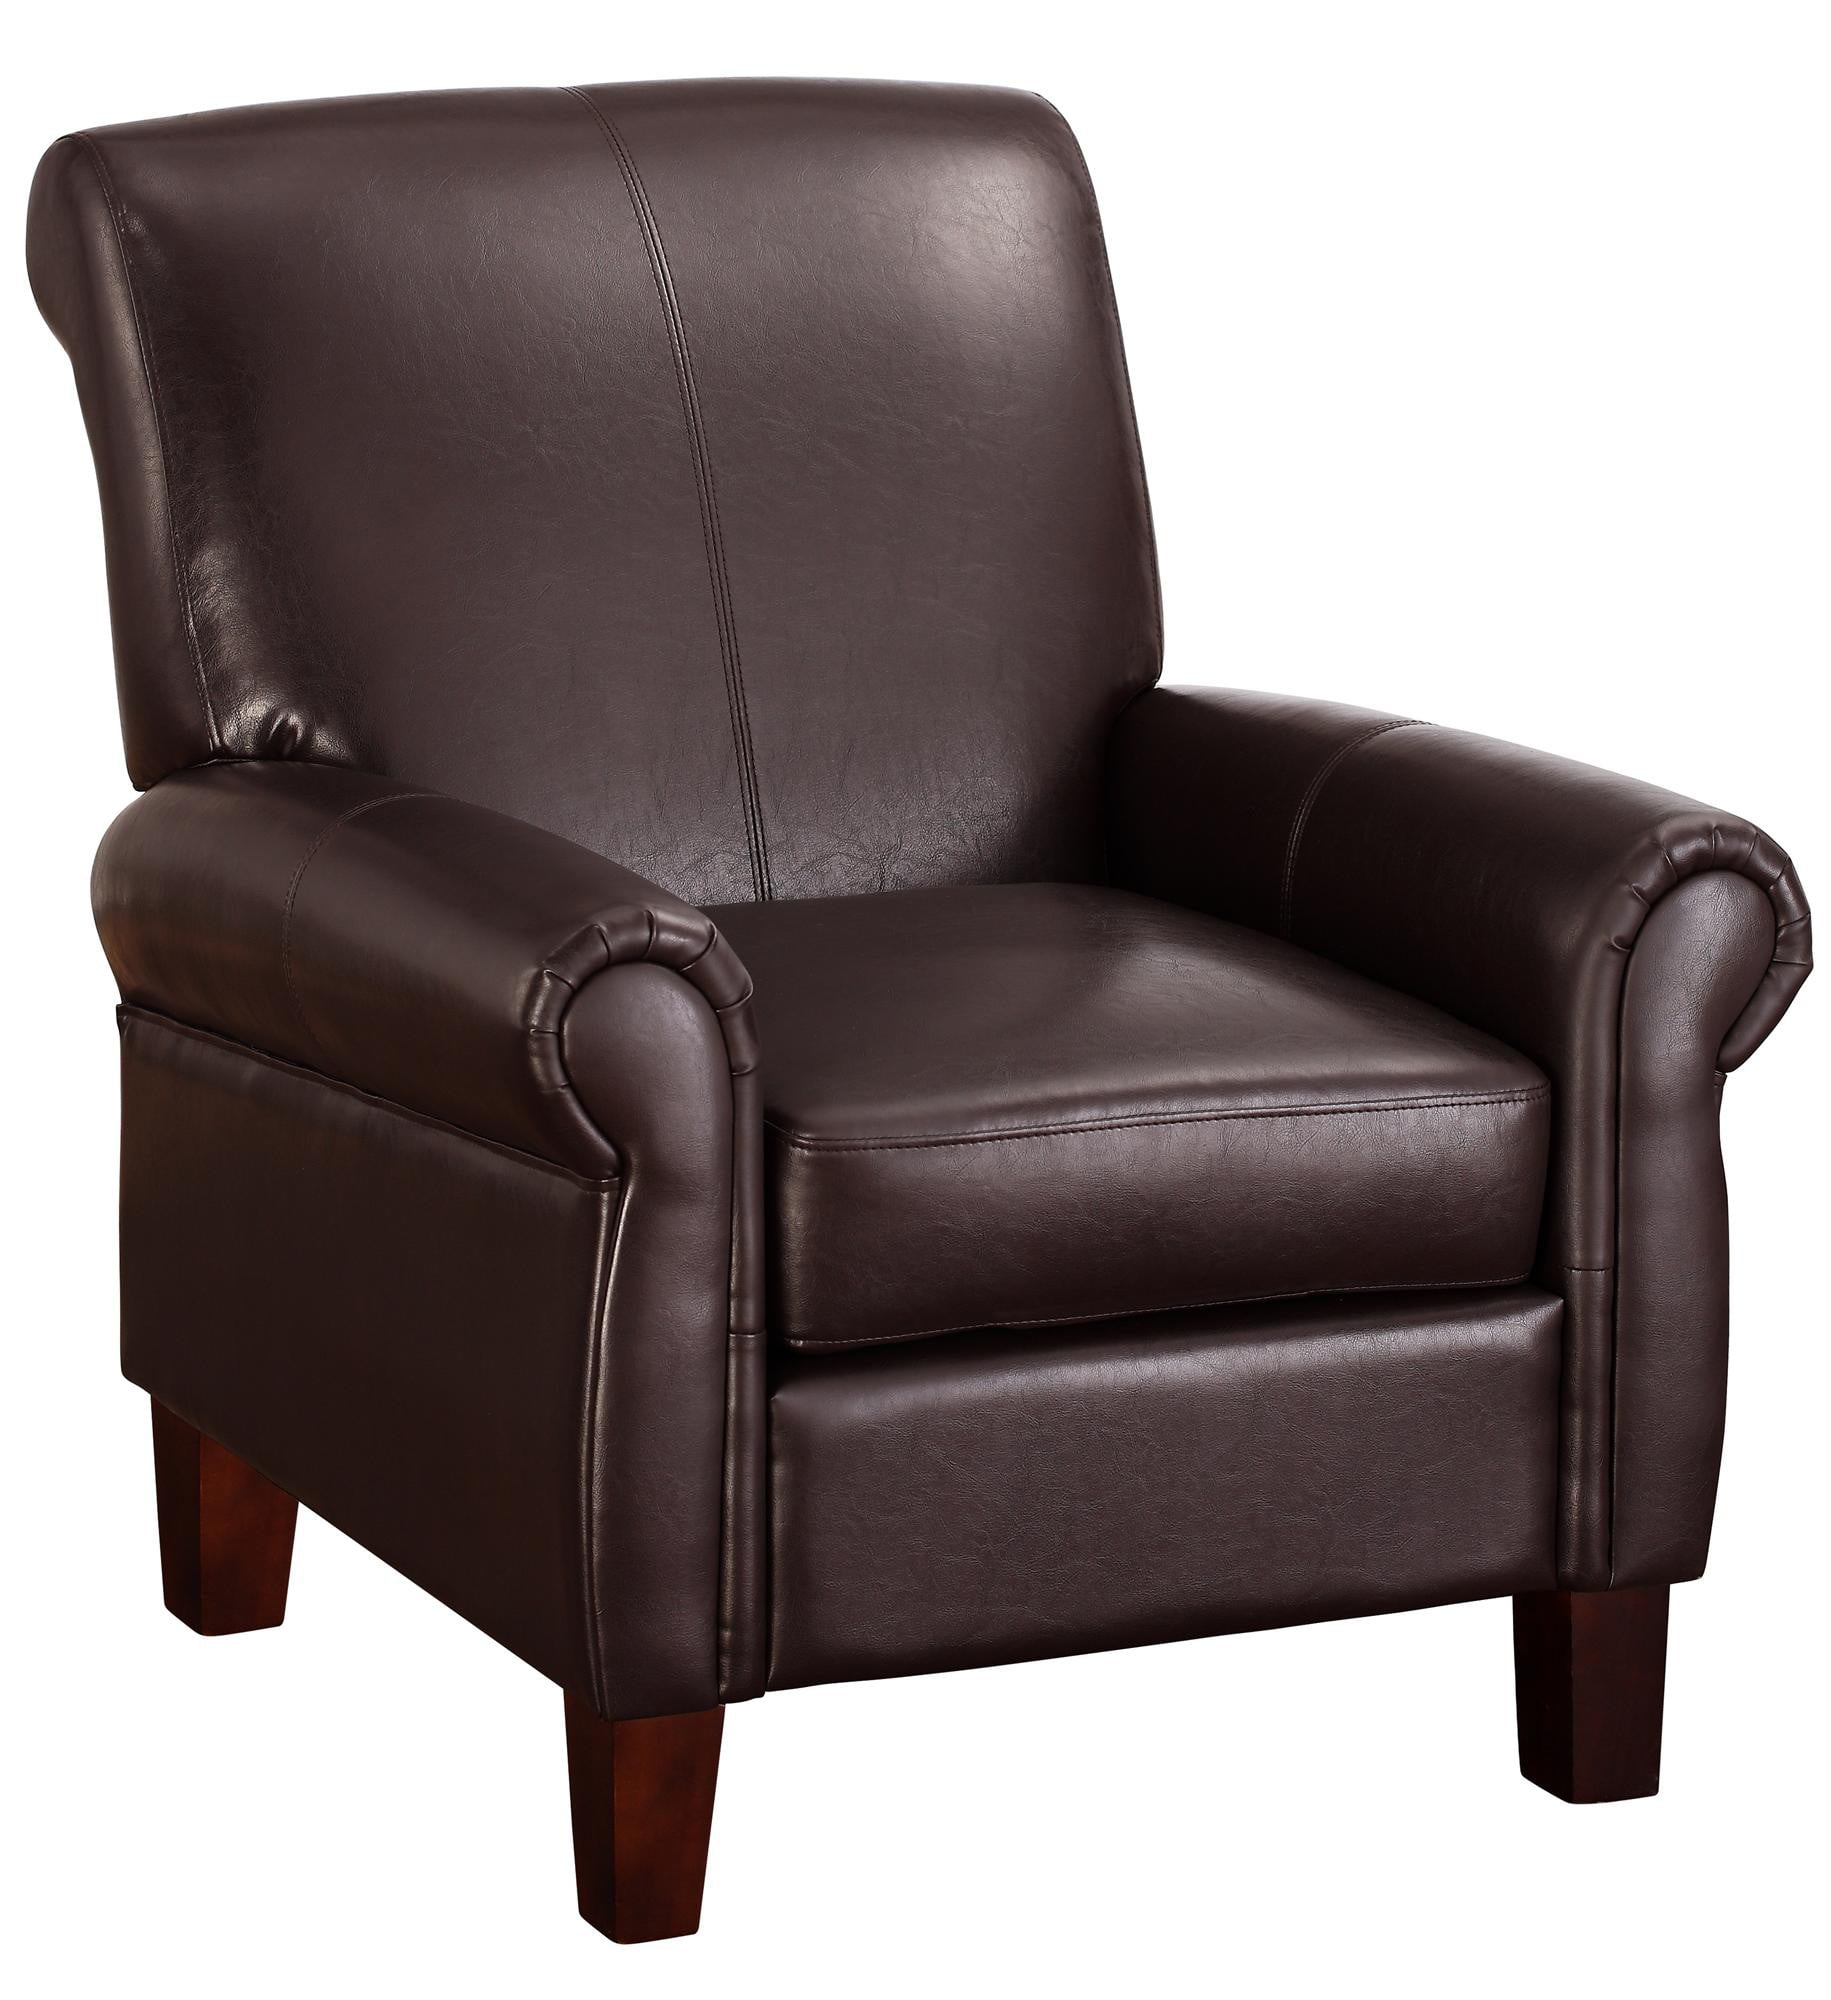 Dorel Living Faux Leather Club Chair, Multiple Colors